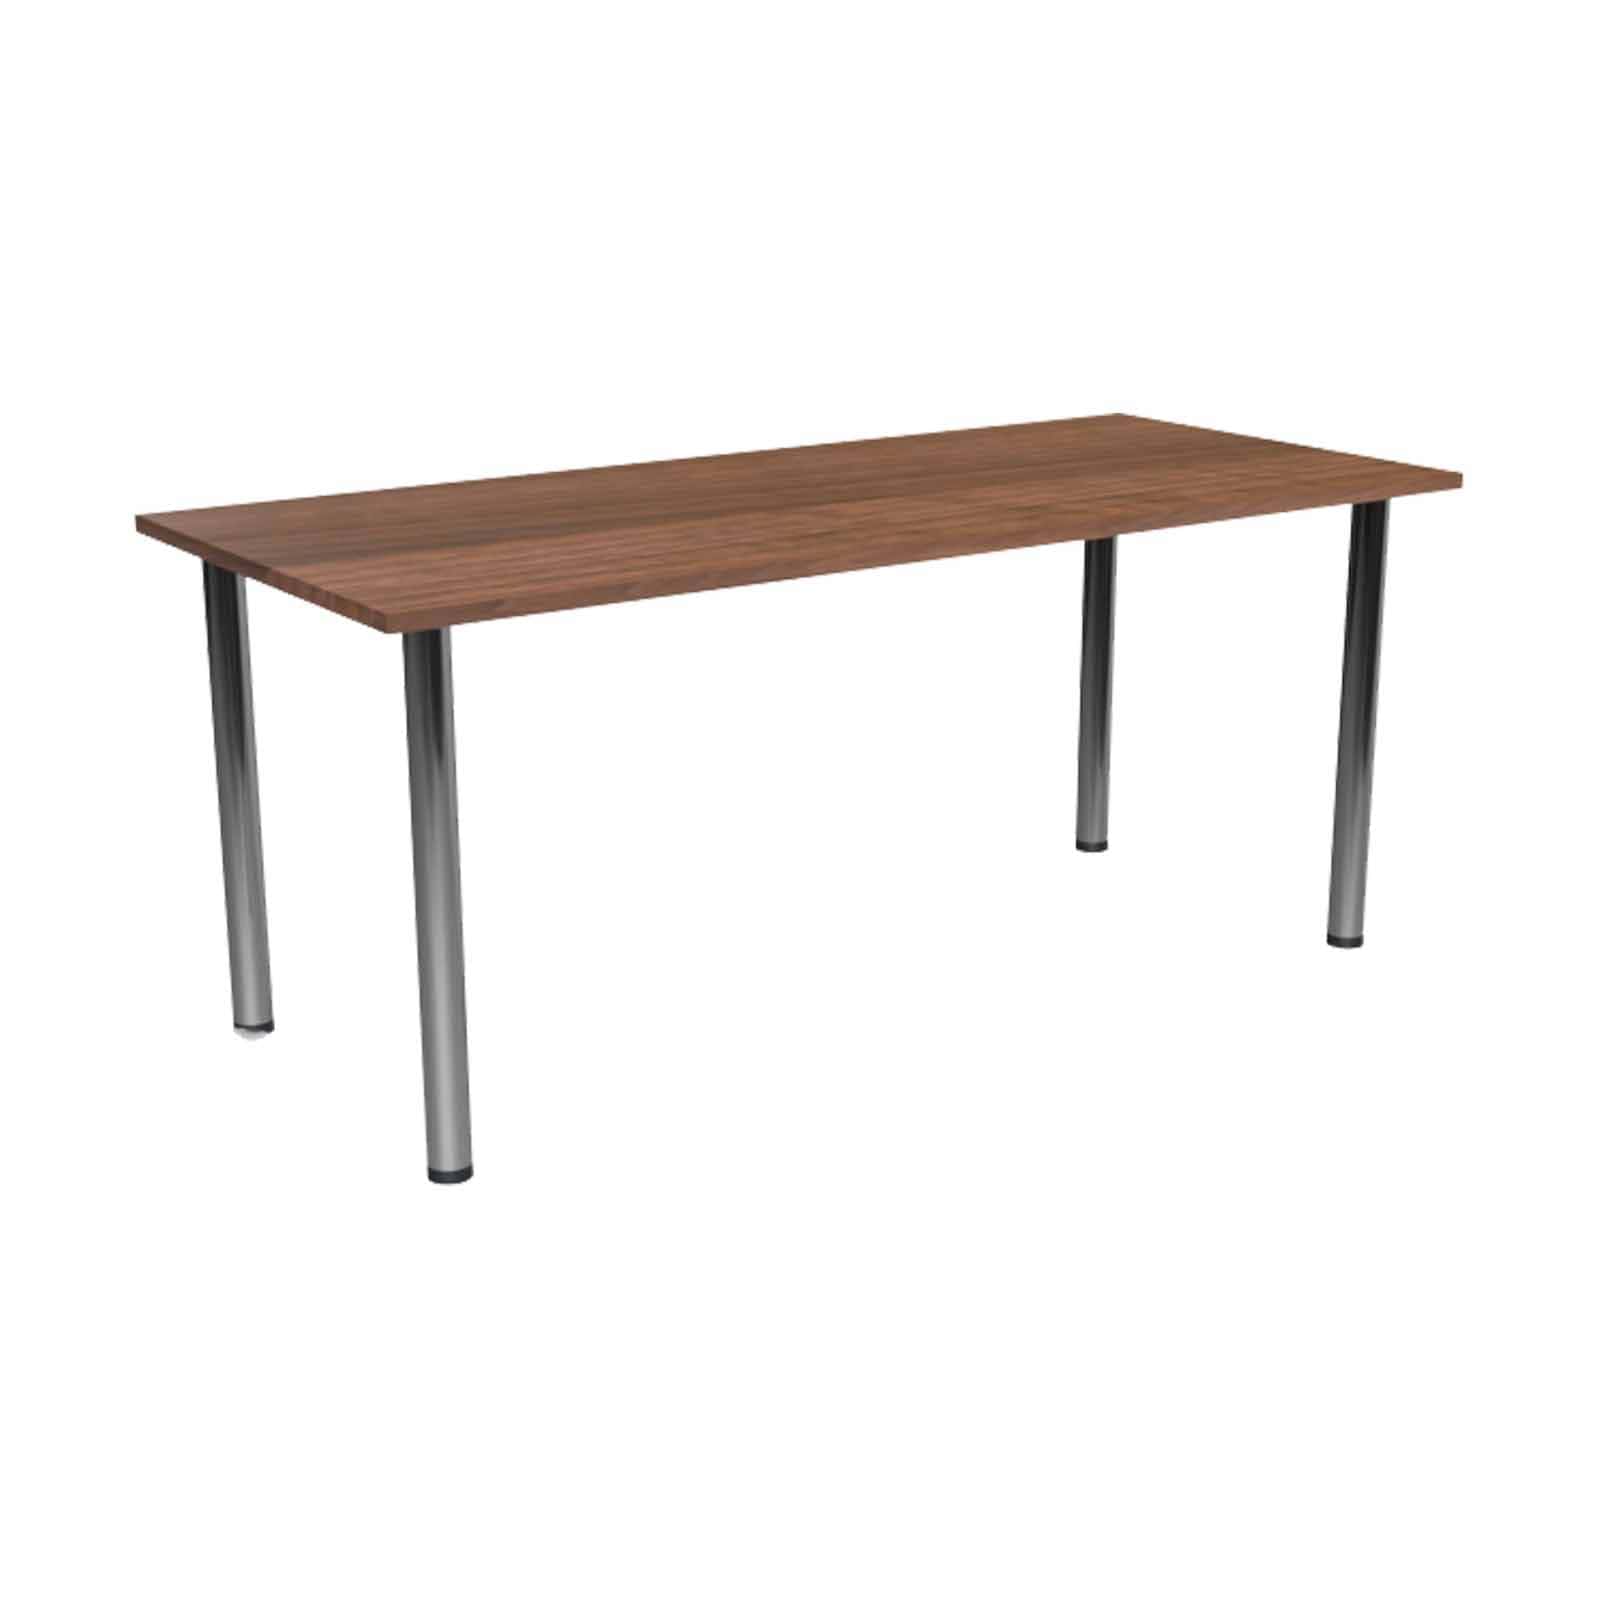 Office Tables - Silver Tubular Legs W1200 x D800 x H740mm